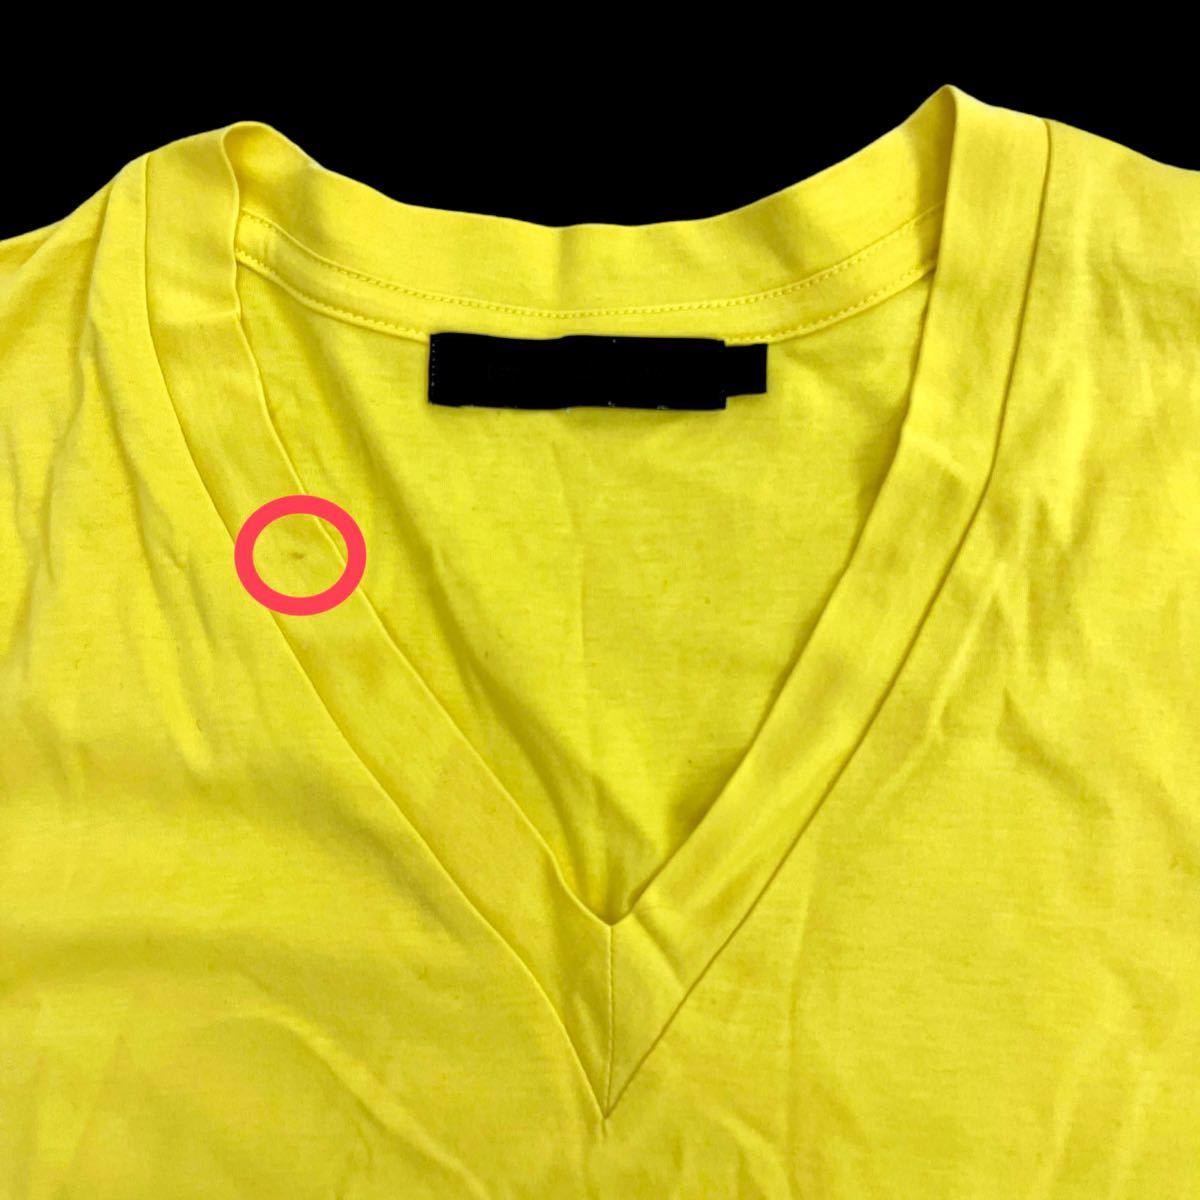 LITHIUM HOMME / リチウムオム メンズ カットソー Vネック 半袖Tシャツ イエロー 46サイズ Sサイズ相当 O-1444_画像3